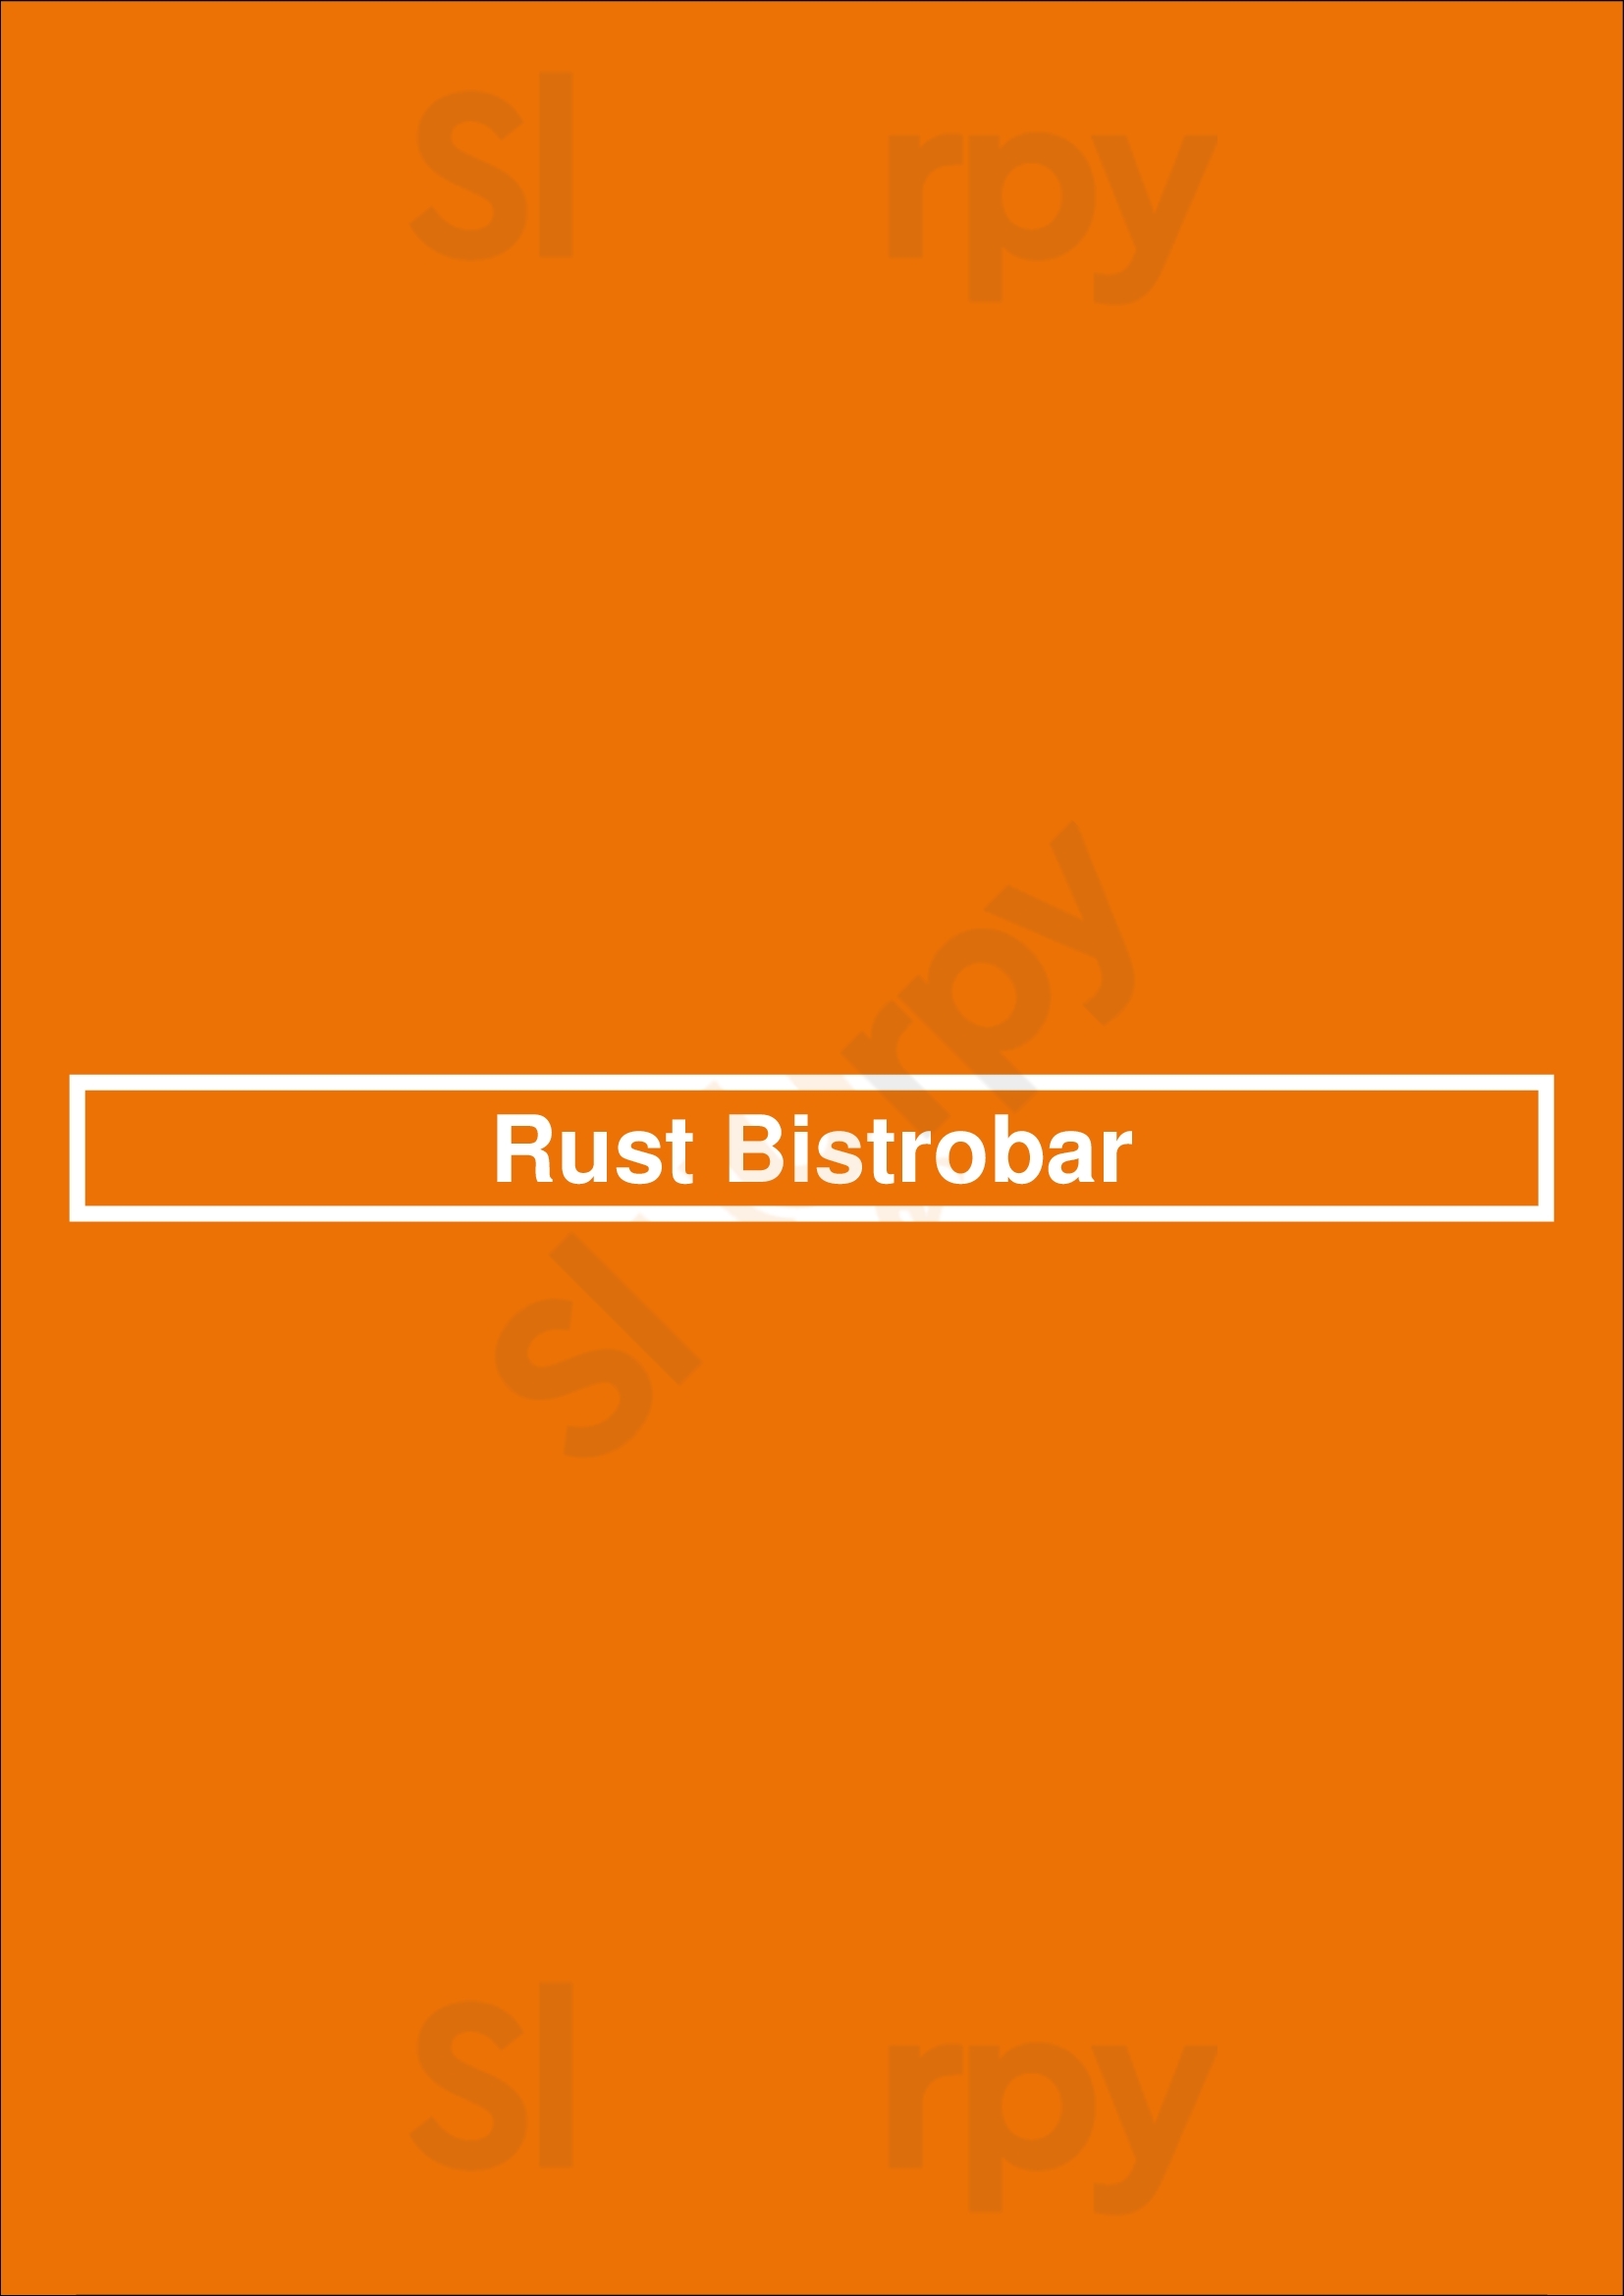 Rust Bistrobar Burlington Menu - 1